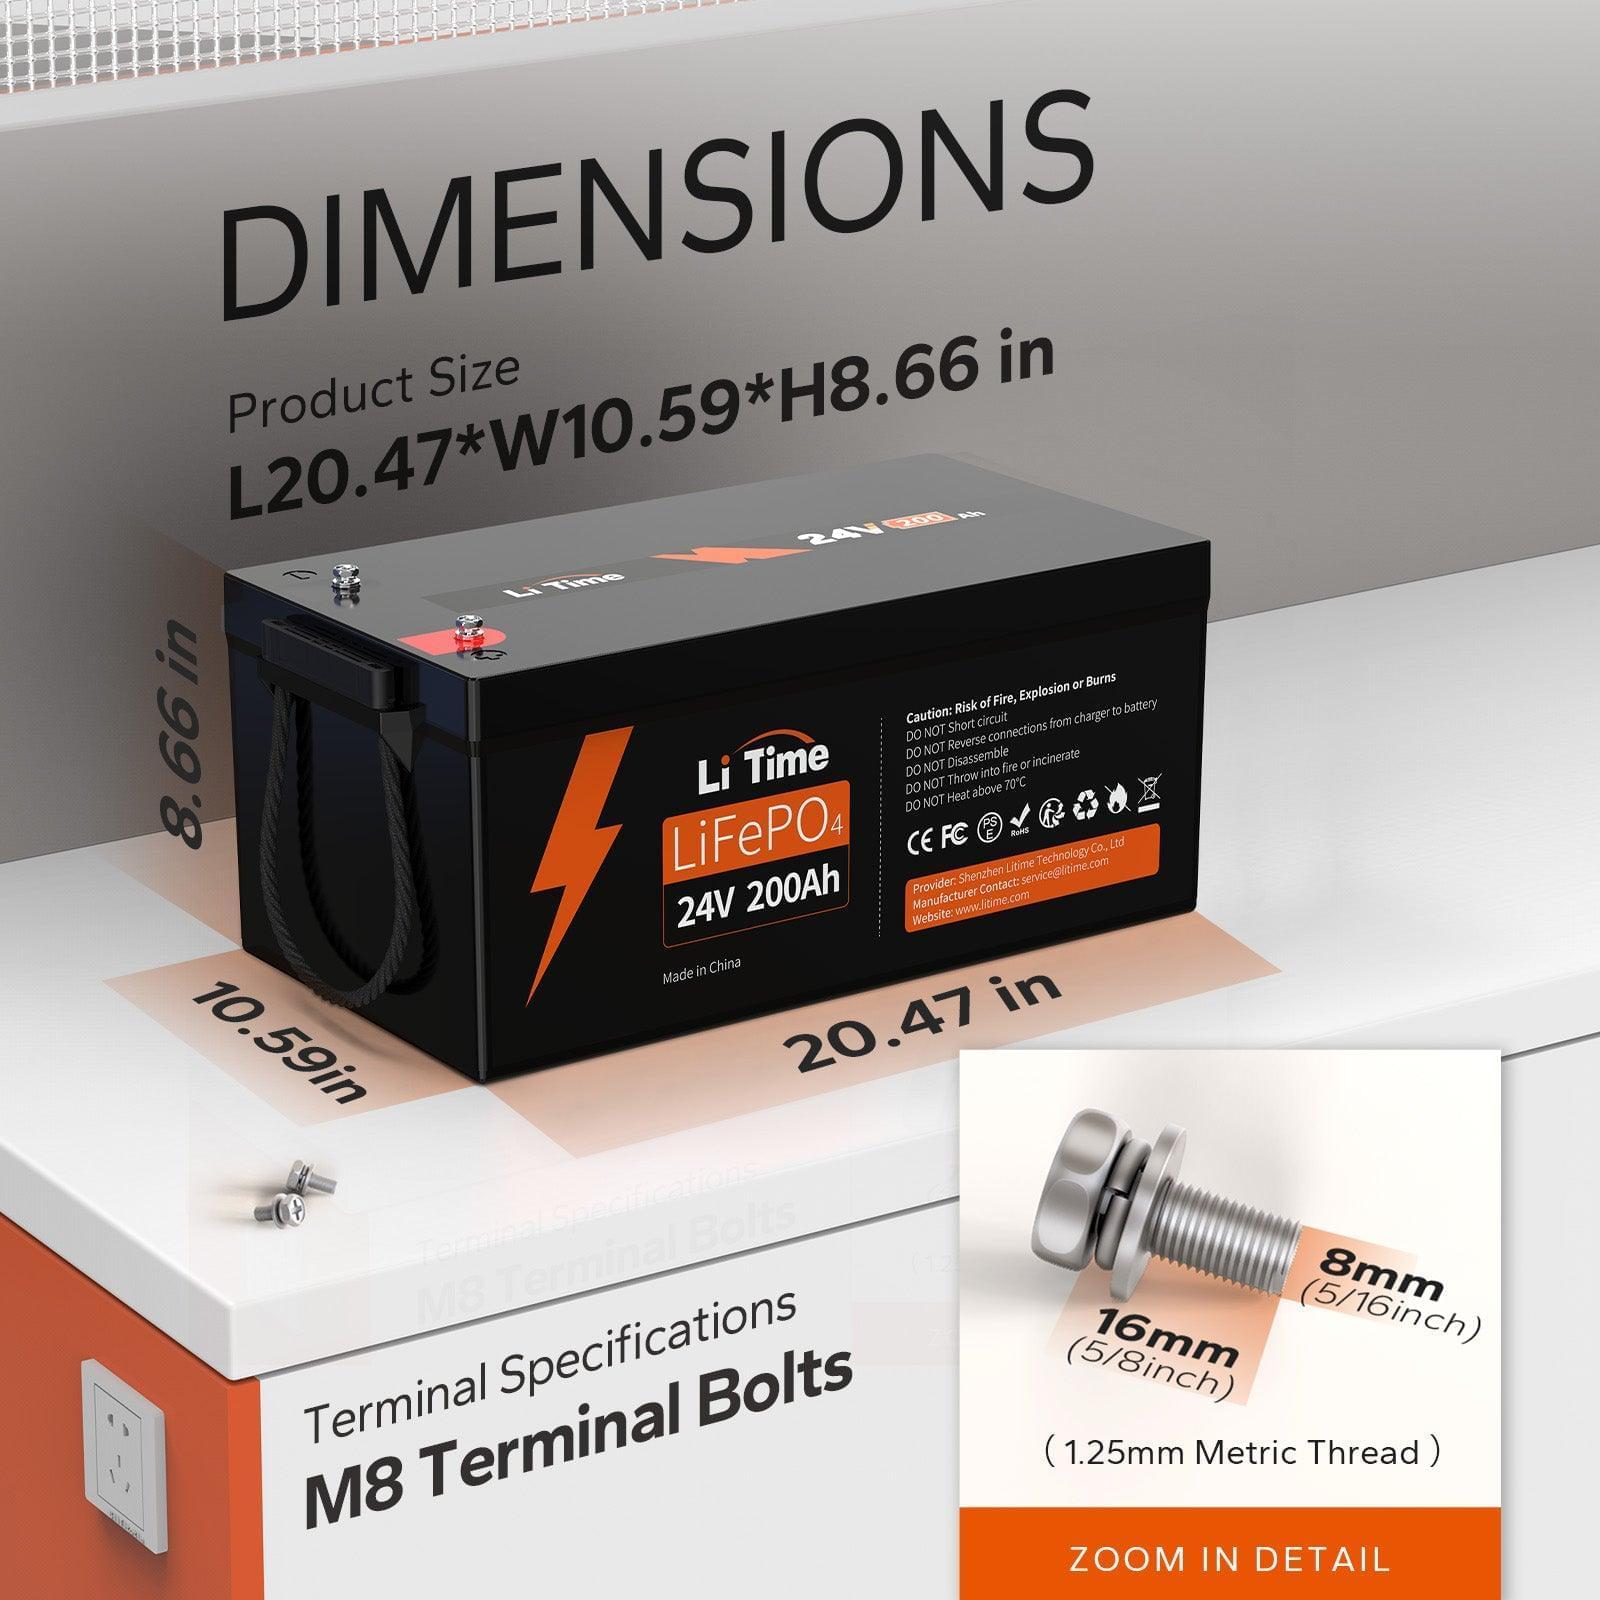 litime 24v 200ah lithium battery dimensions